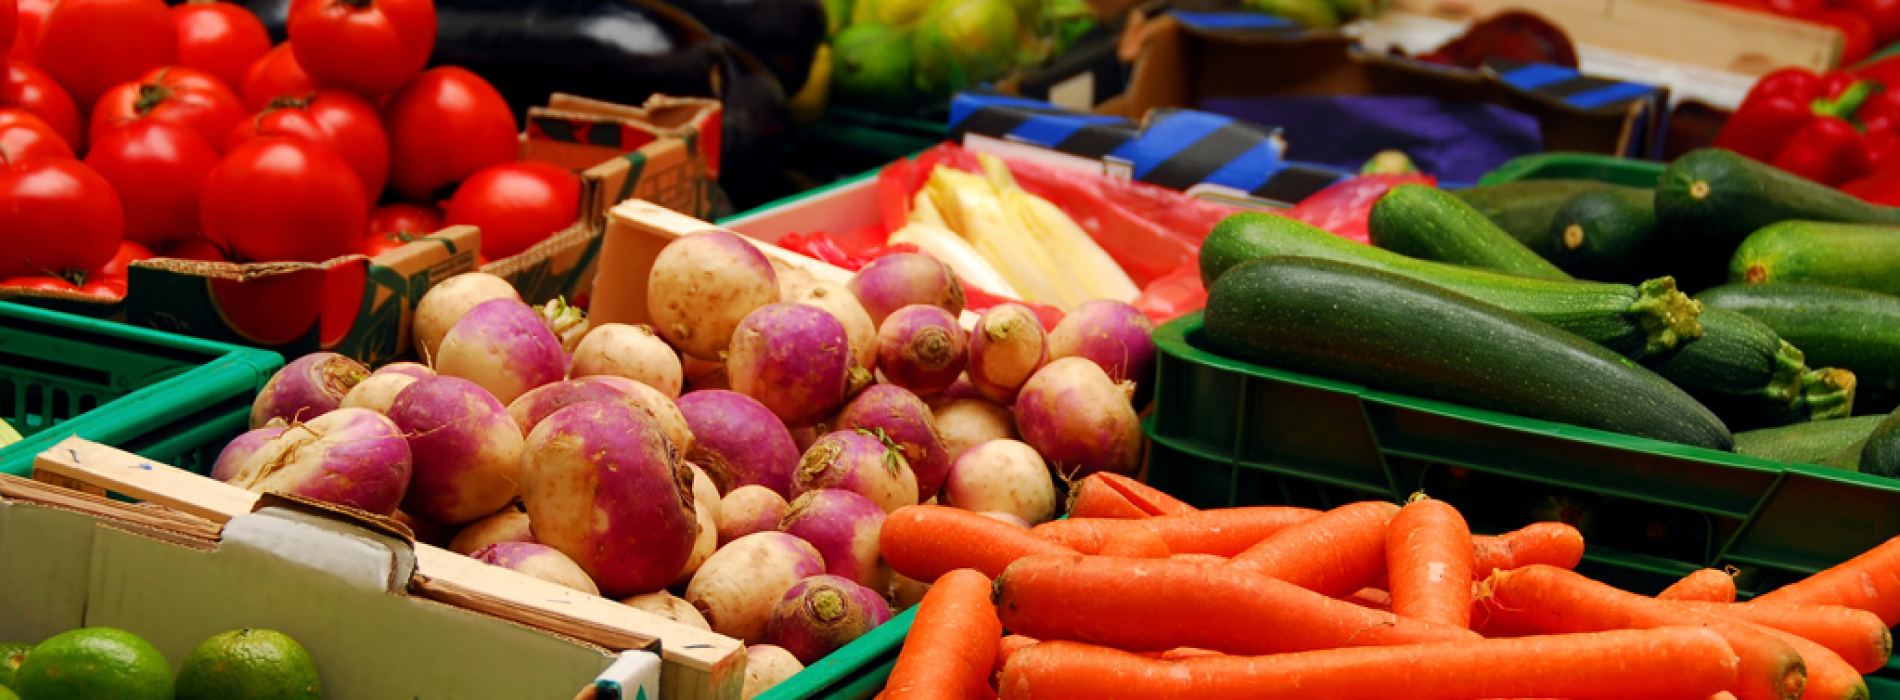 Nieuwe studie: groente en fruit verkleinen kans op kanker fors